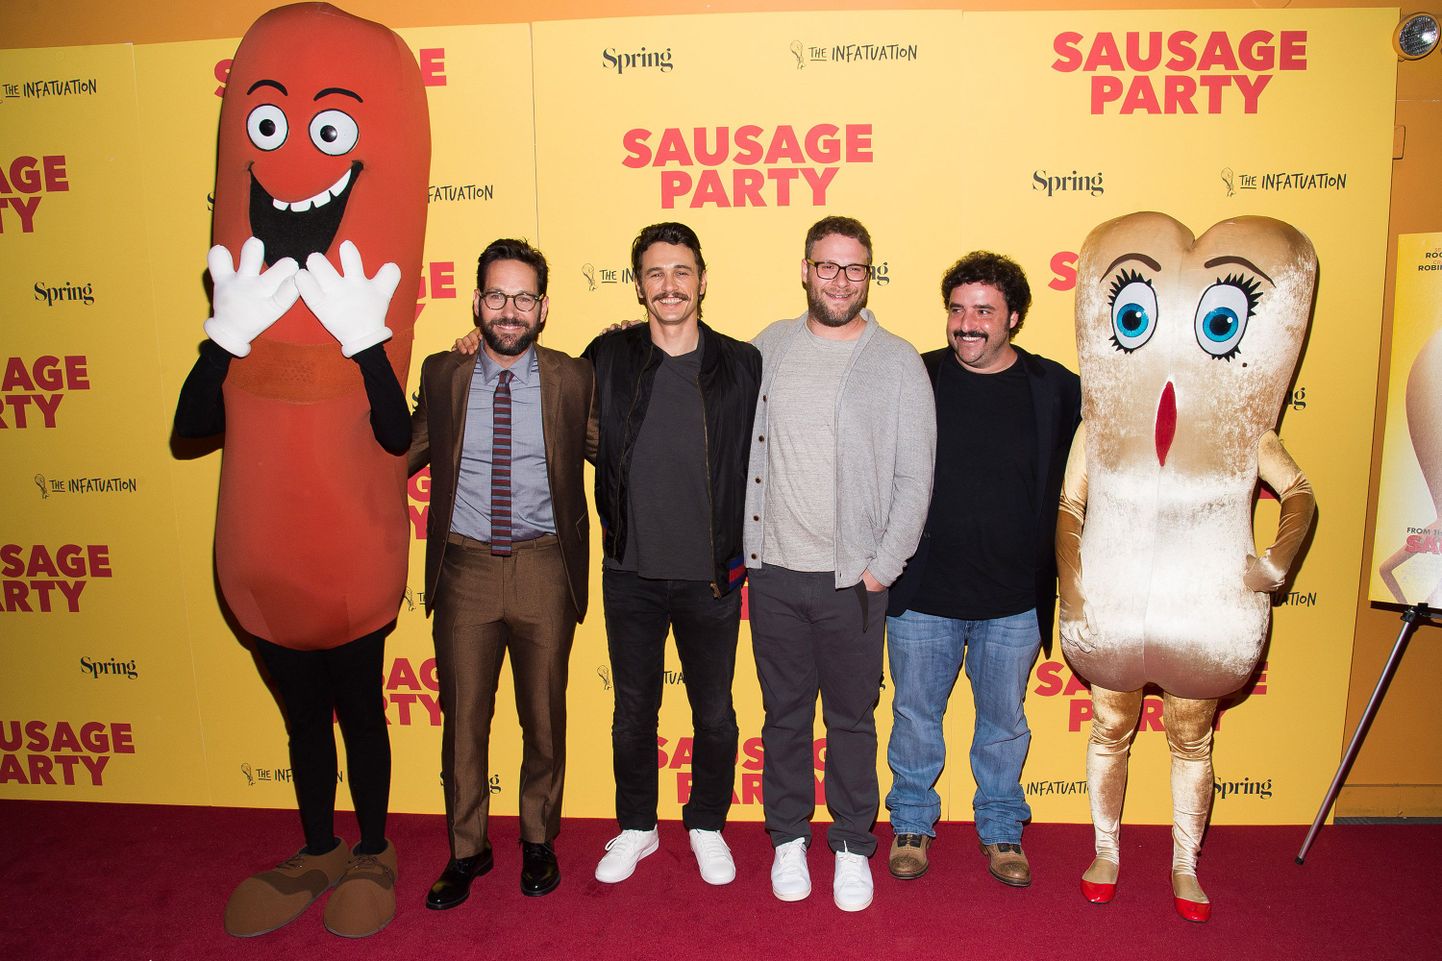 "Sausage Party" osatäitjad Paul Rudd, James Franco, Seth Rogen ja David Krumholtz